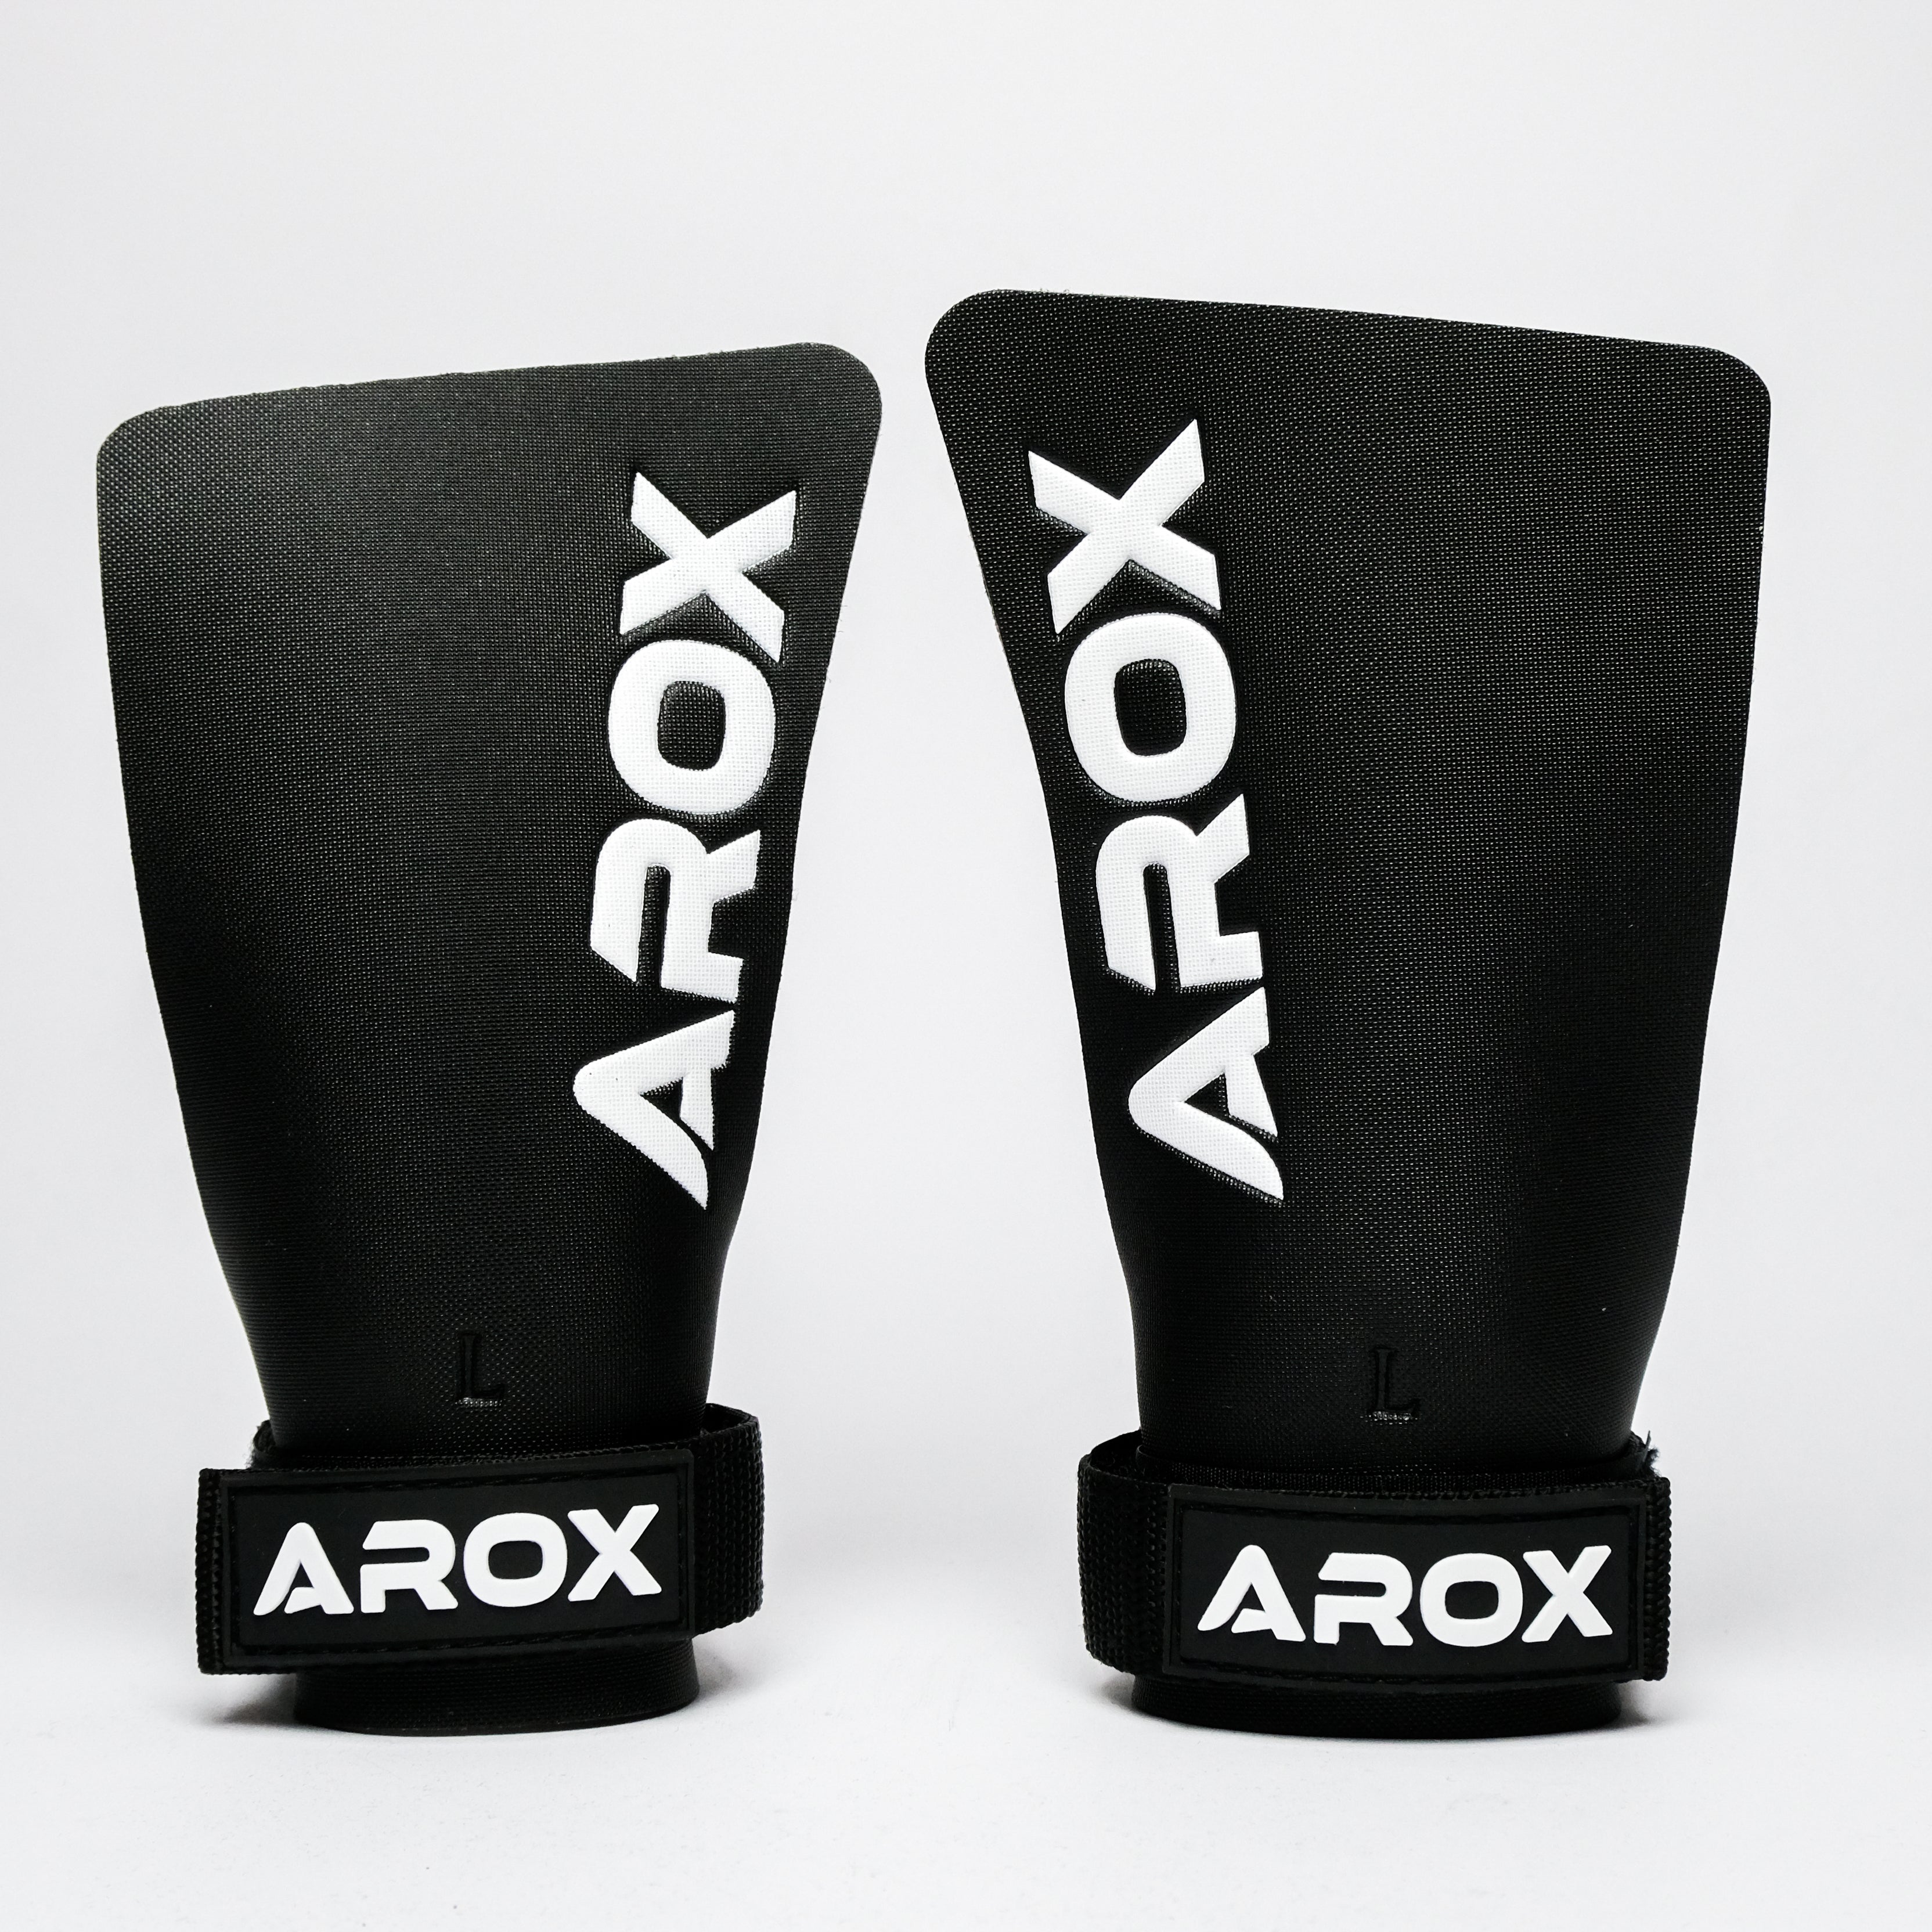 Arox - Hybrid grips 4.0